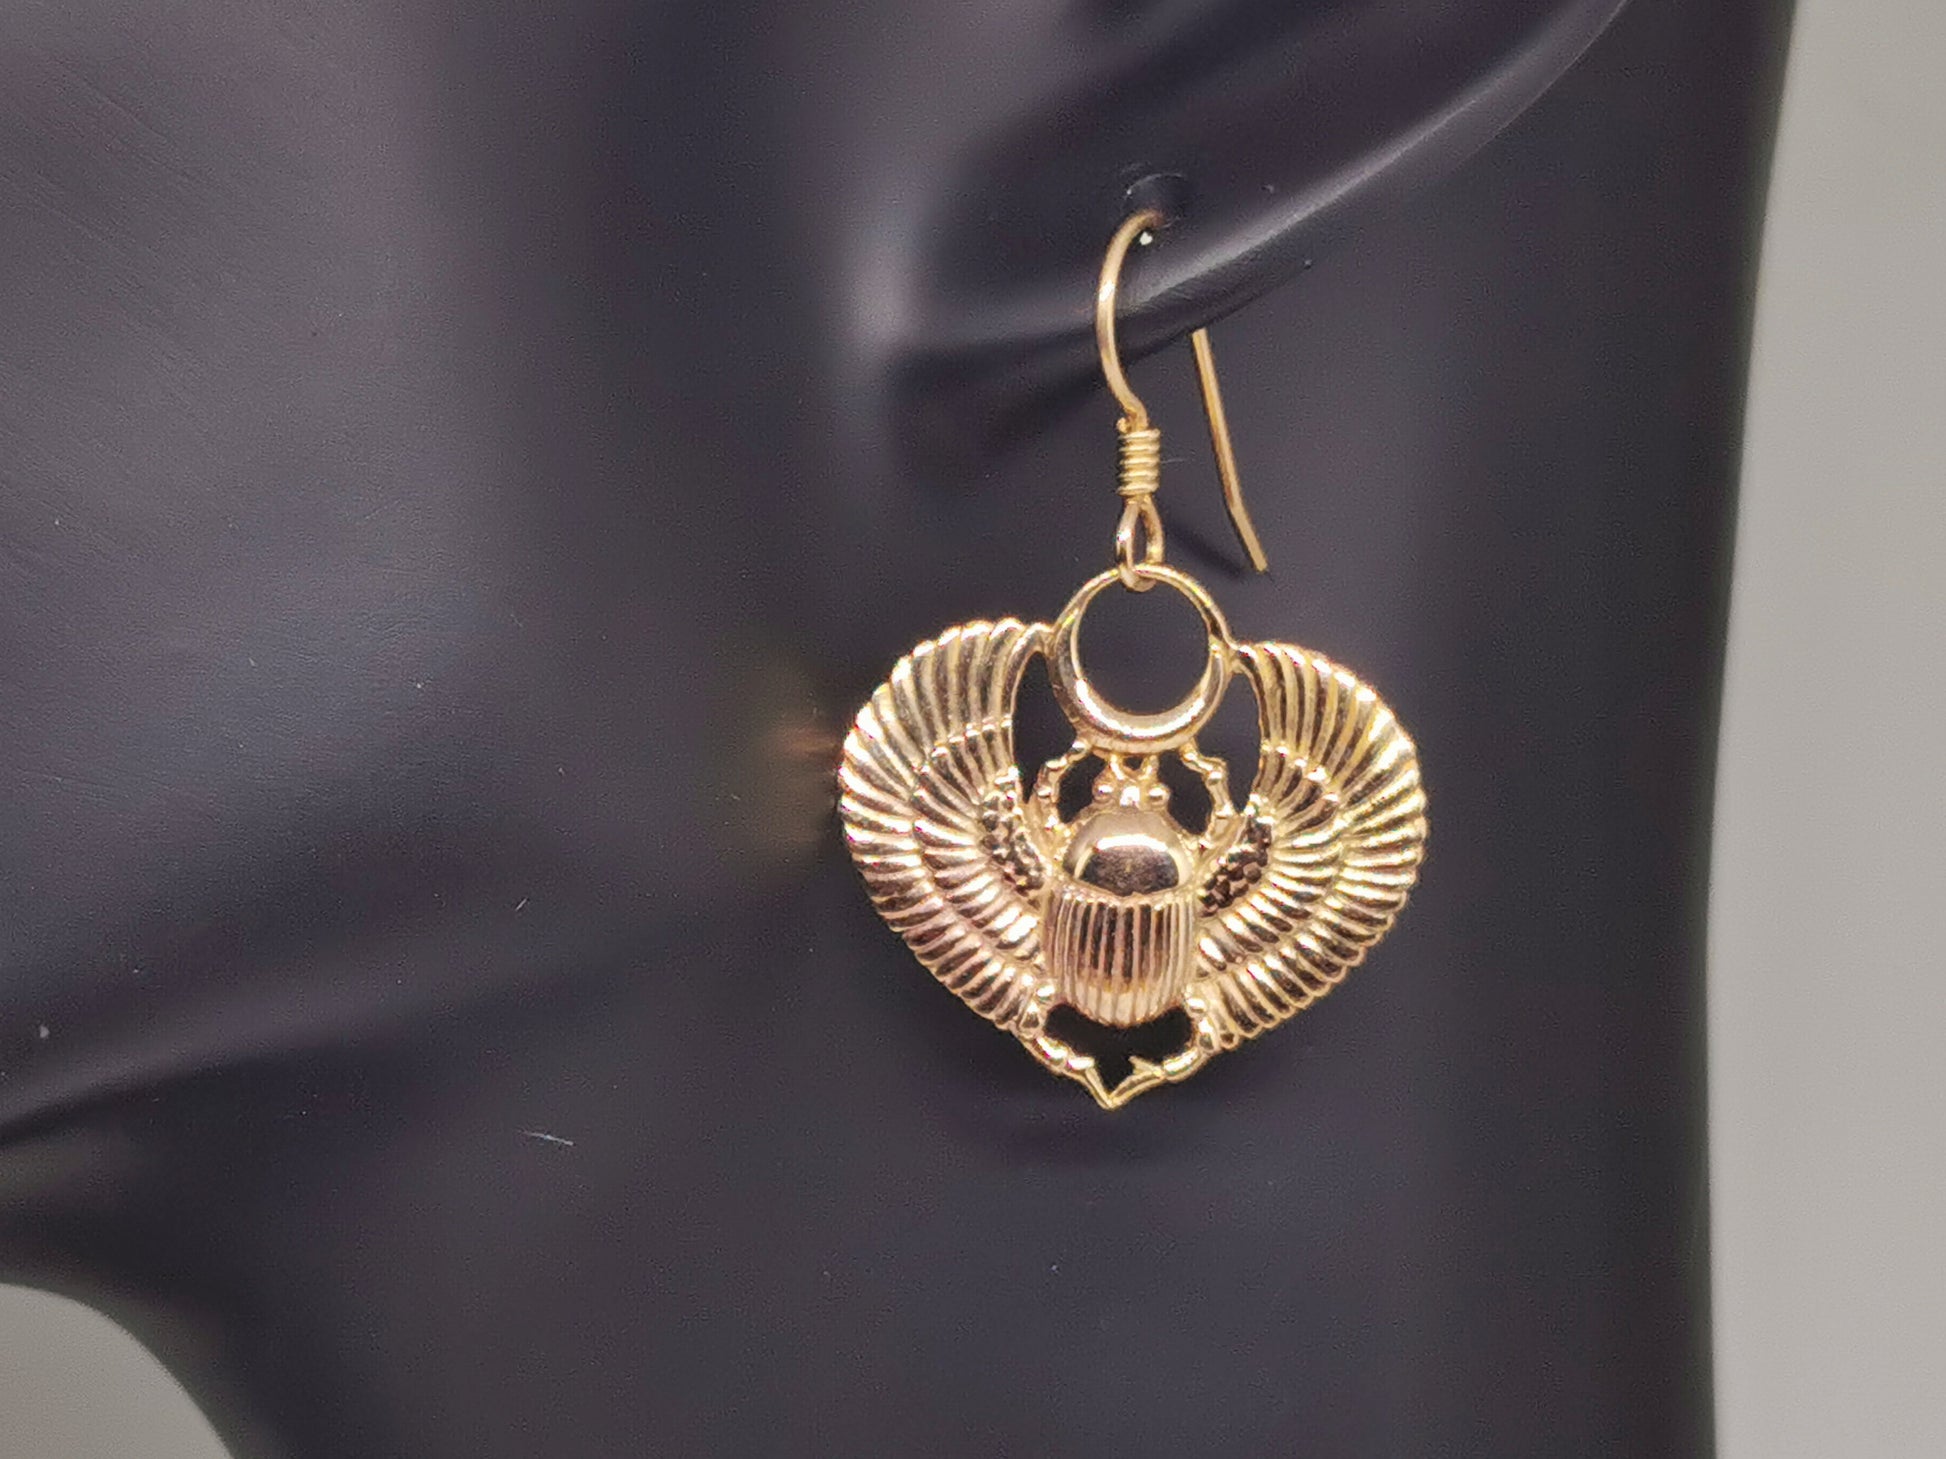 Egyptian Winged Scarab Earrings in Sterling Silver or Antique Bronze, Bronze Winged Scarab Earrings, Antique Bronze Scarab Earrings, Ancient Egyptian Scarab Jewelry, Ancient Egyptian Scarab Earrings, Winged Scarab Earrings, Winged Scarab Jewellery